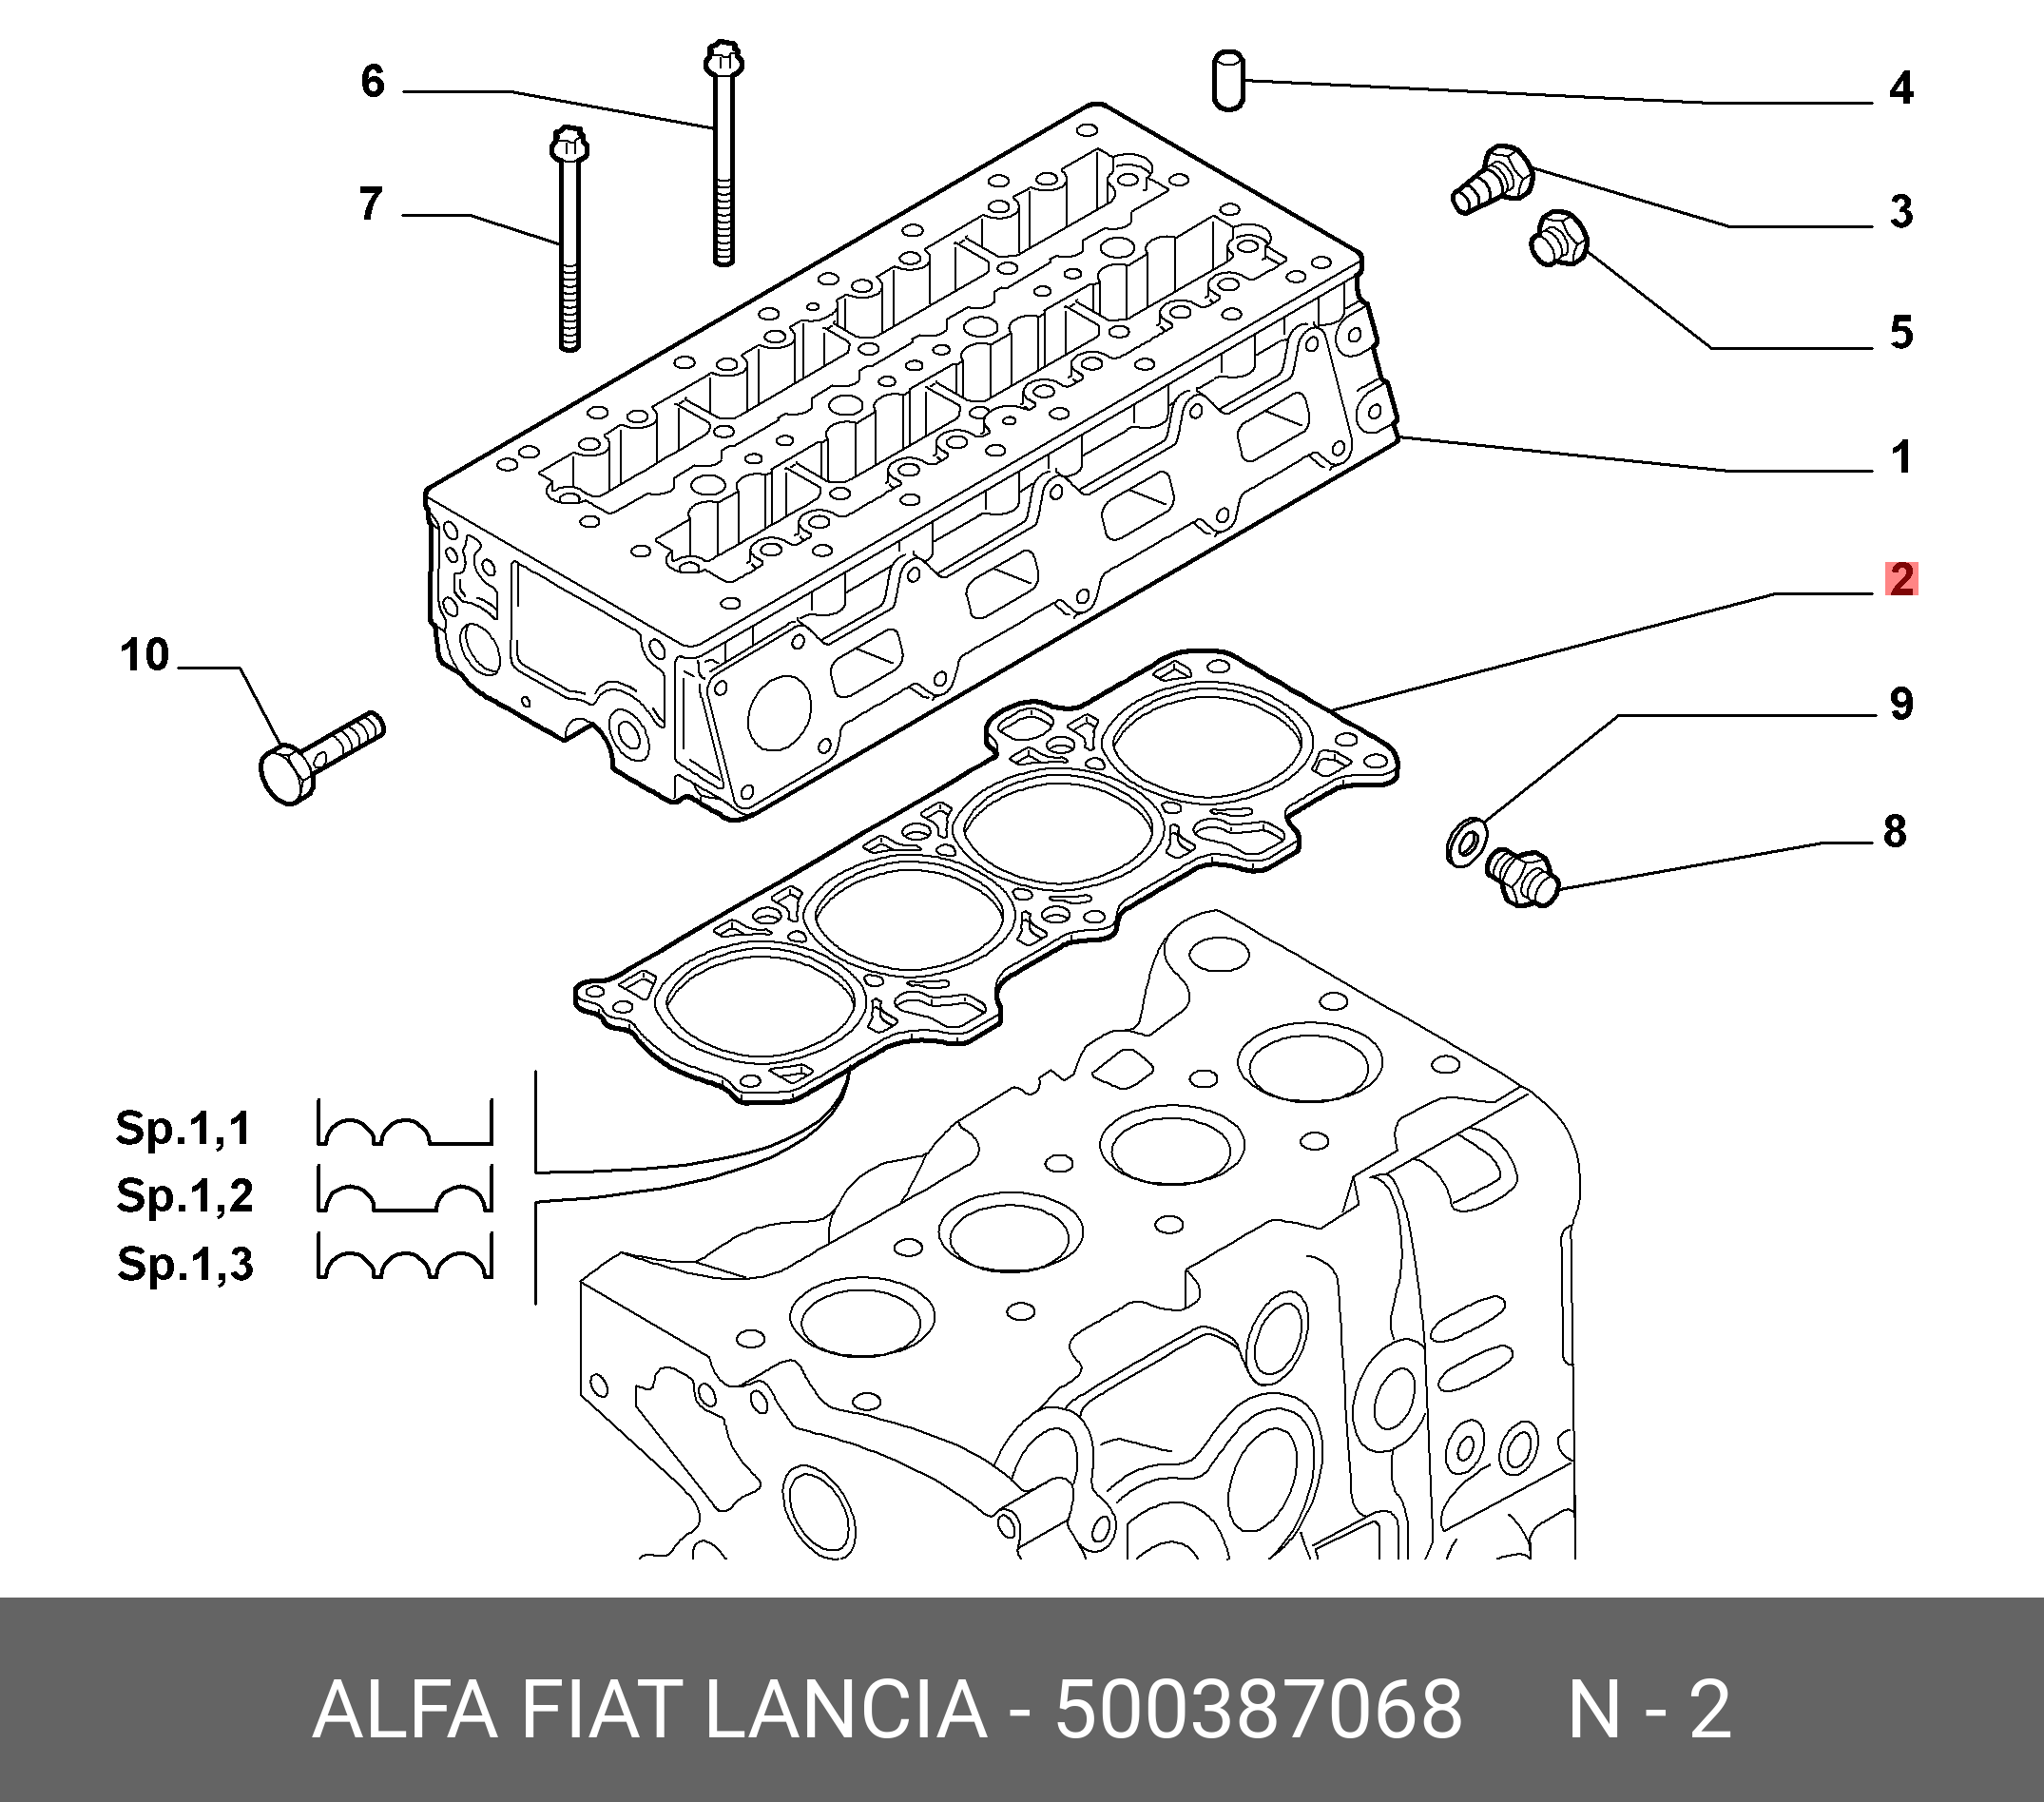 Прокладка головки блока цилиндров - Fiat/Alfa/Lancia 500387068